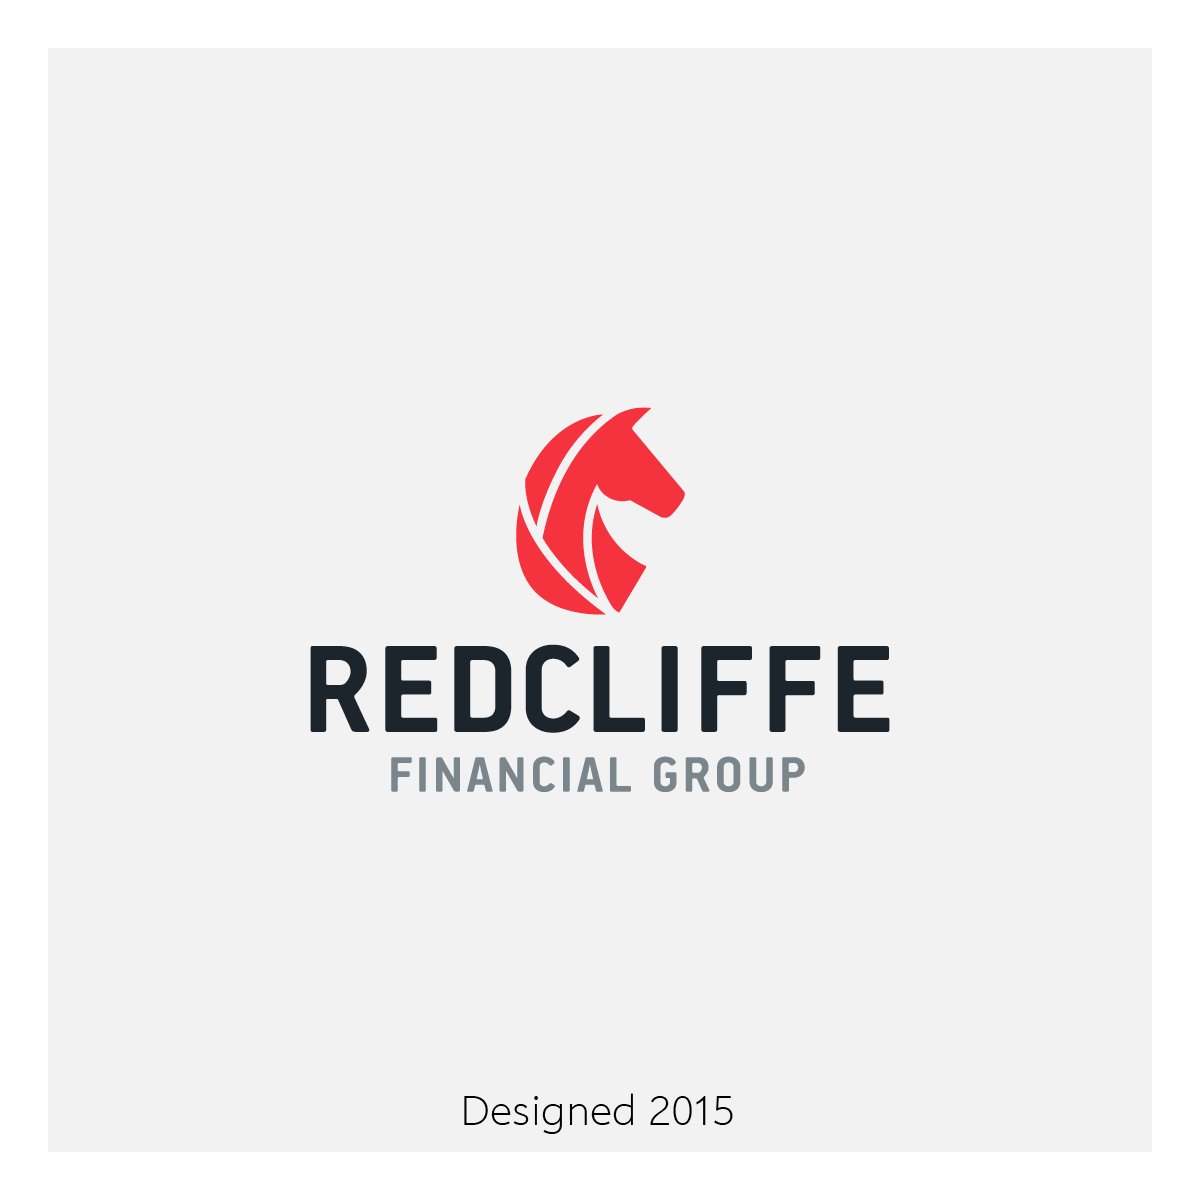 Redcliffe Logo Design | Etude Digital